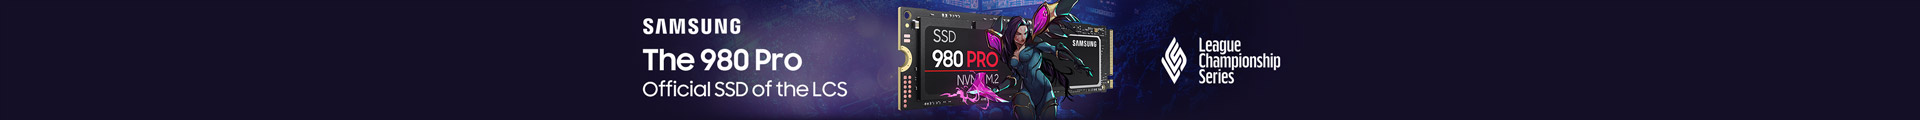 The 980 Pro